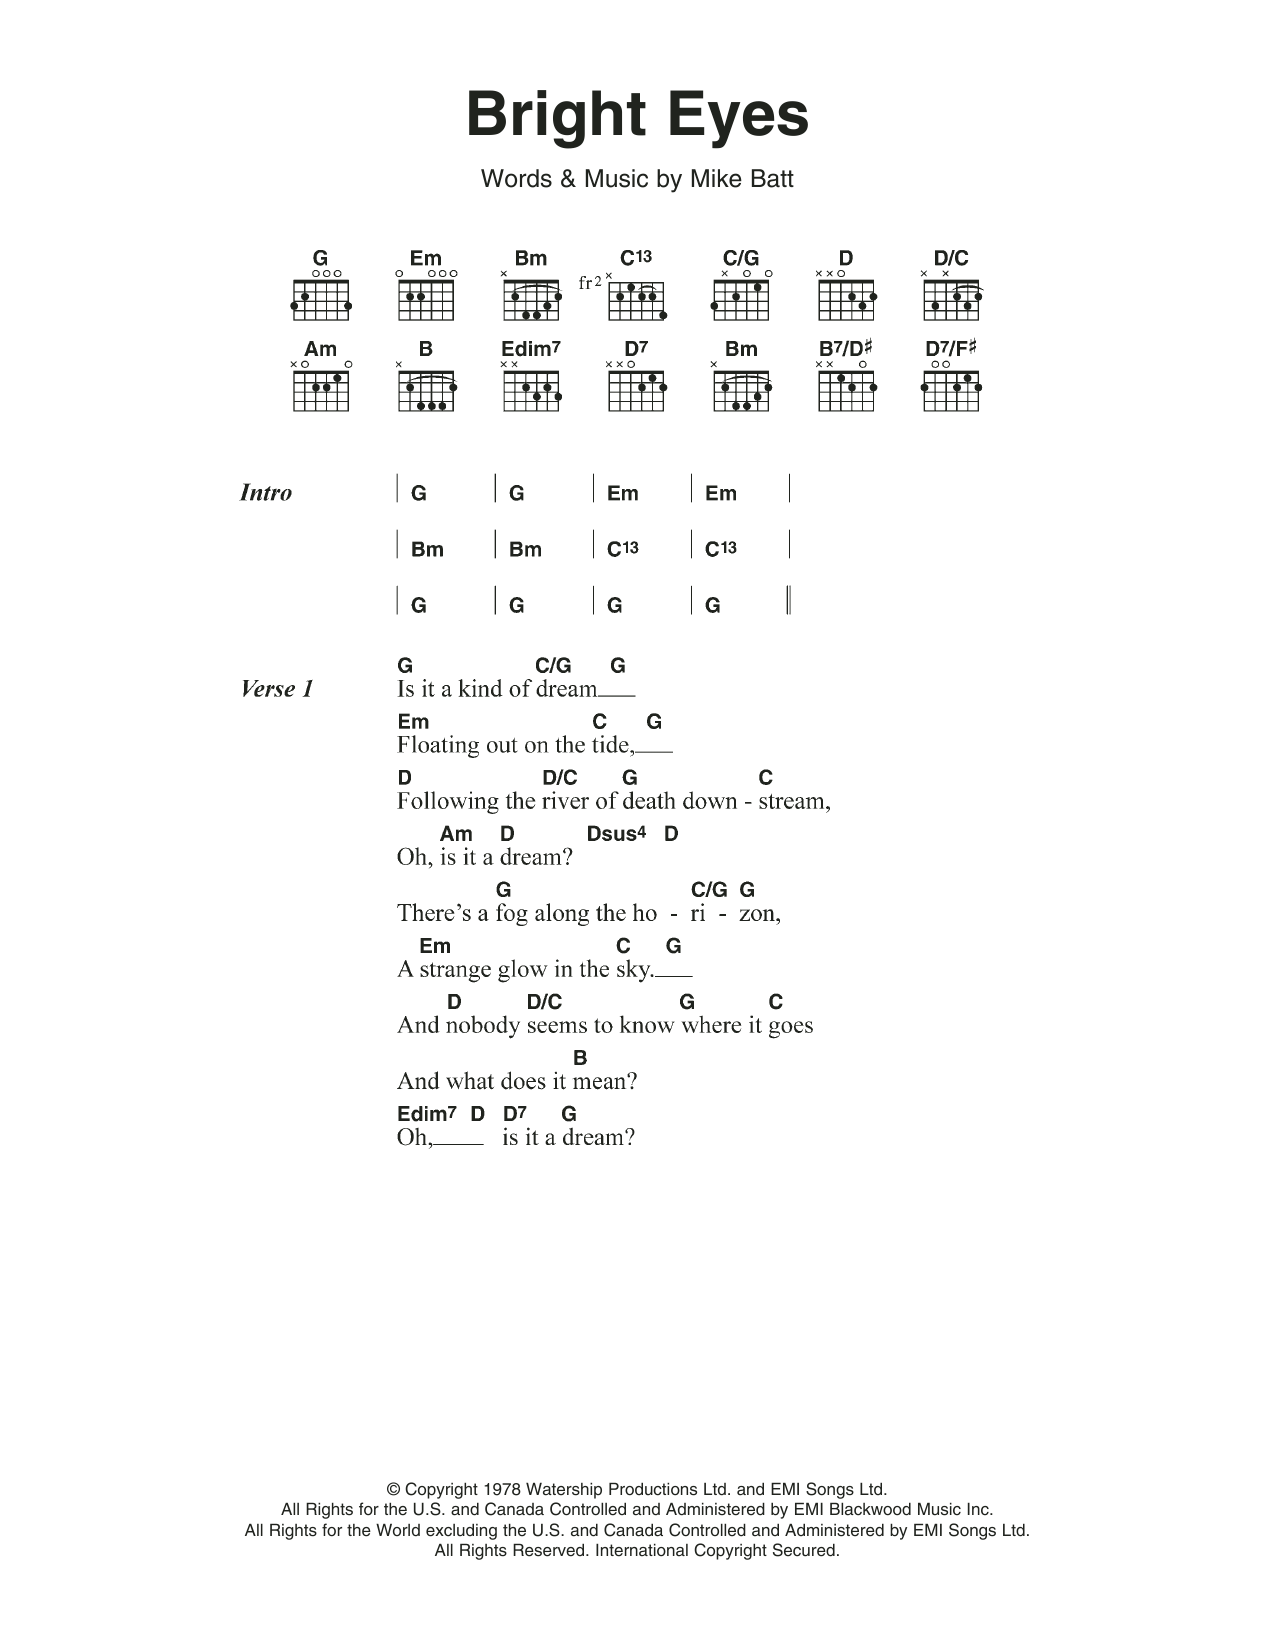 Art Garfunkel Bright Eyes sheet music notes and chords arranged for Guitar Chords/Lyrics